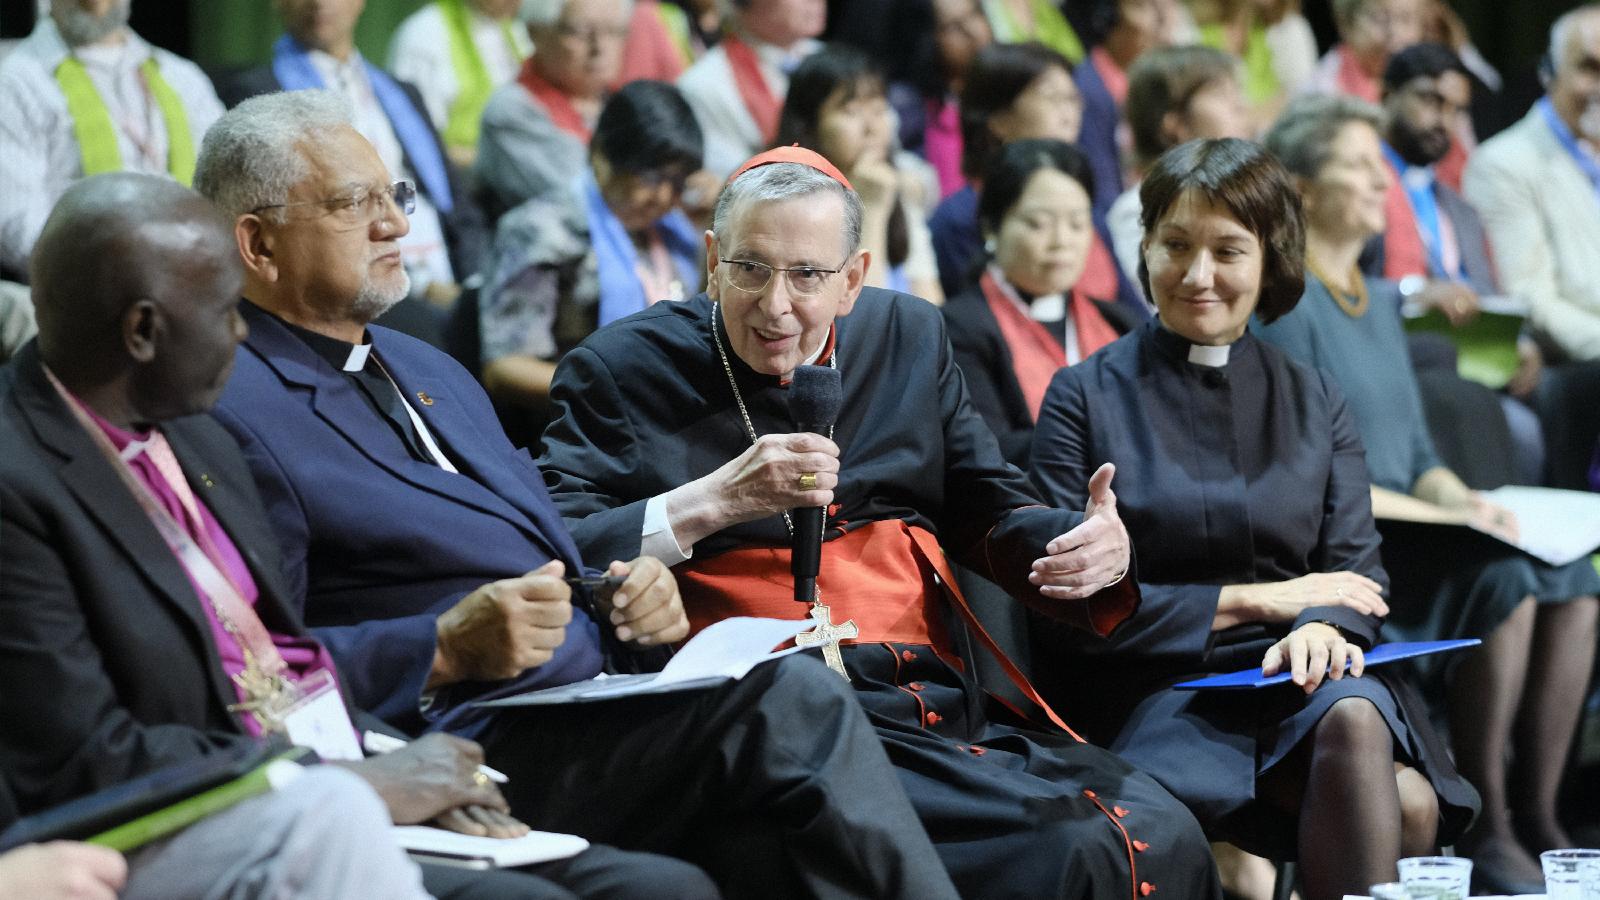 Cardinal Koch at Lutheran World Federation assembly